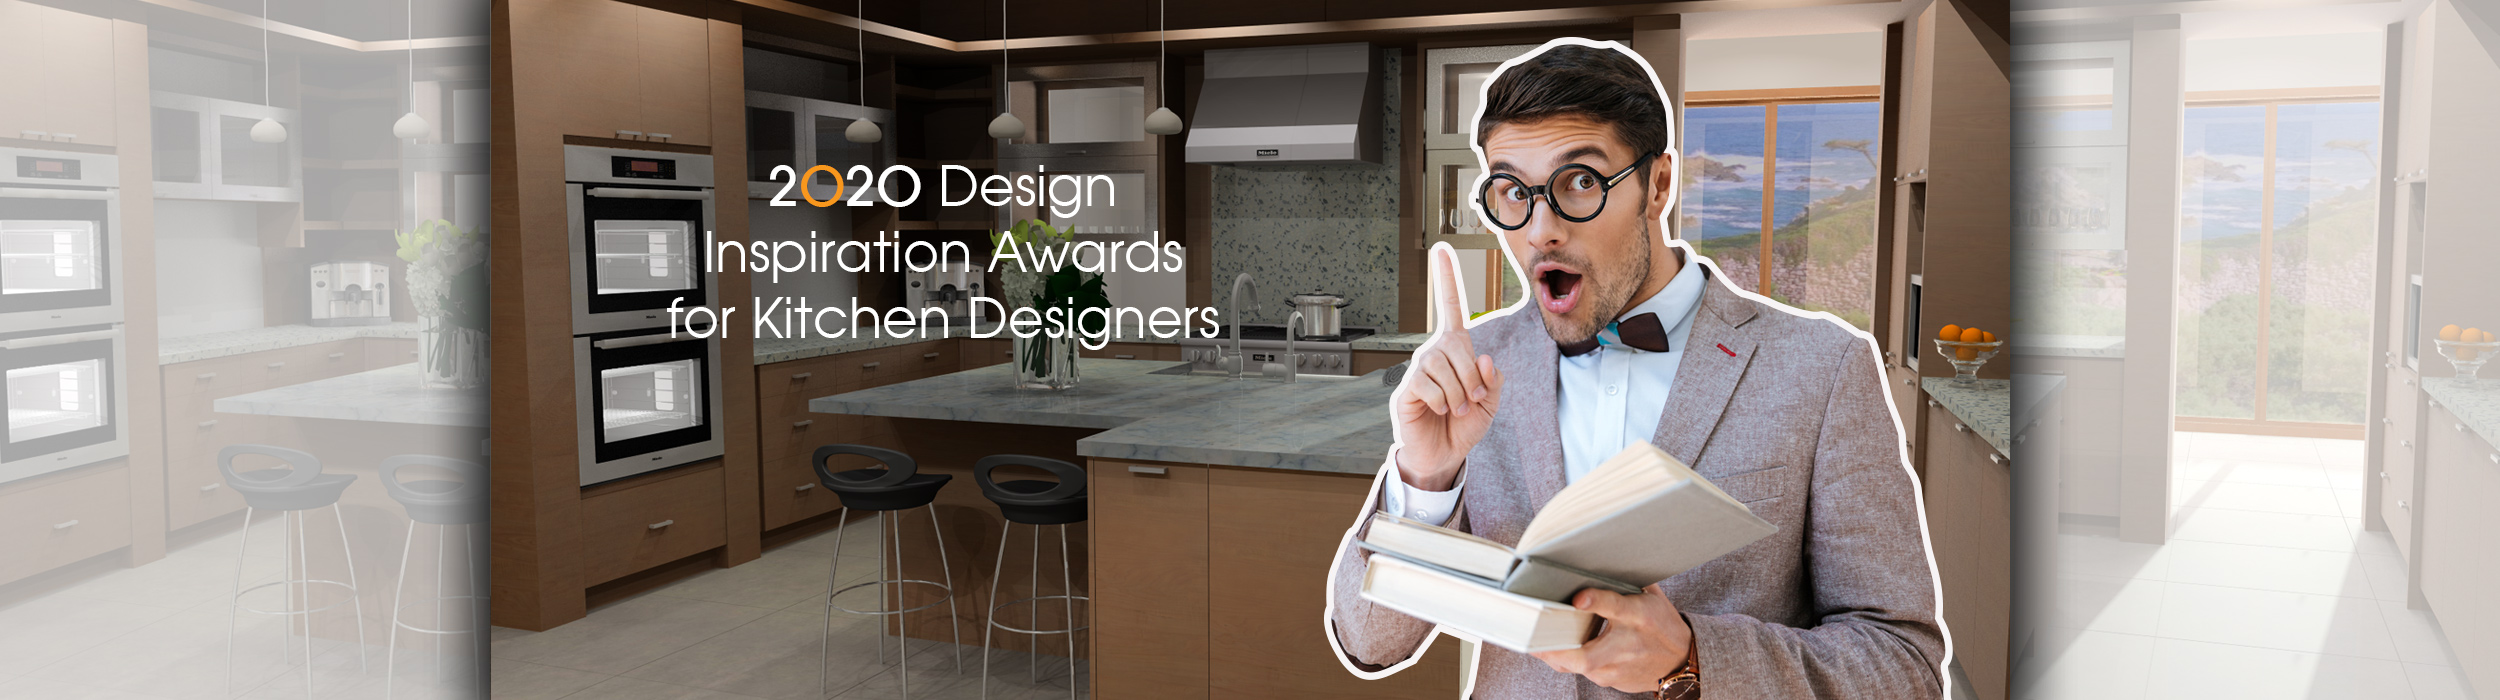 2020 Design Contest Winners